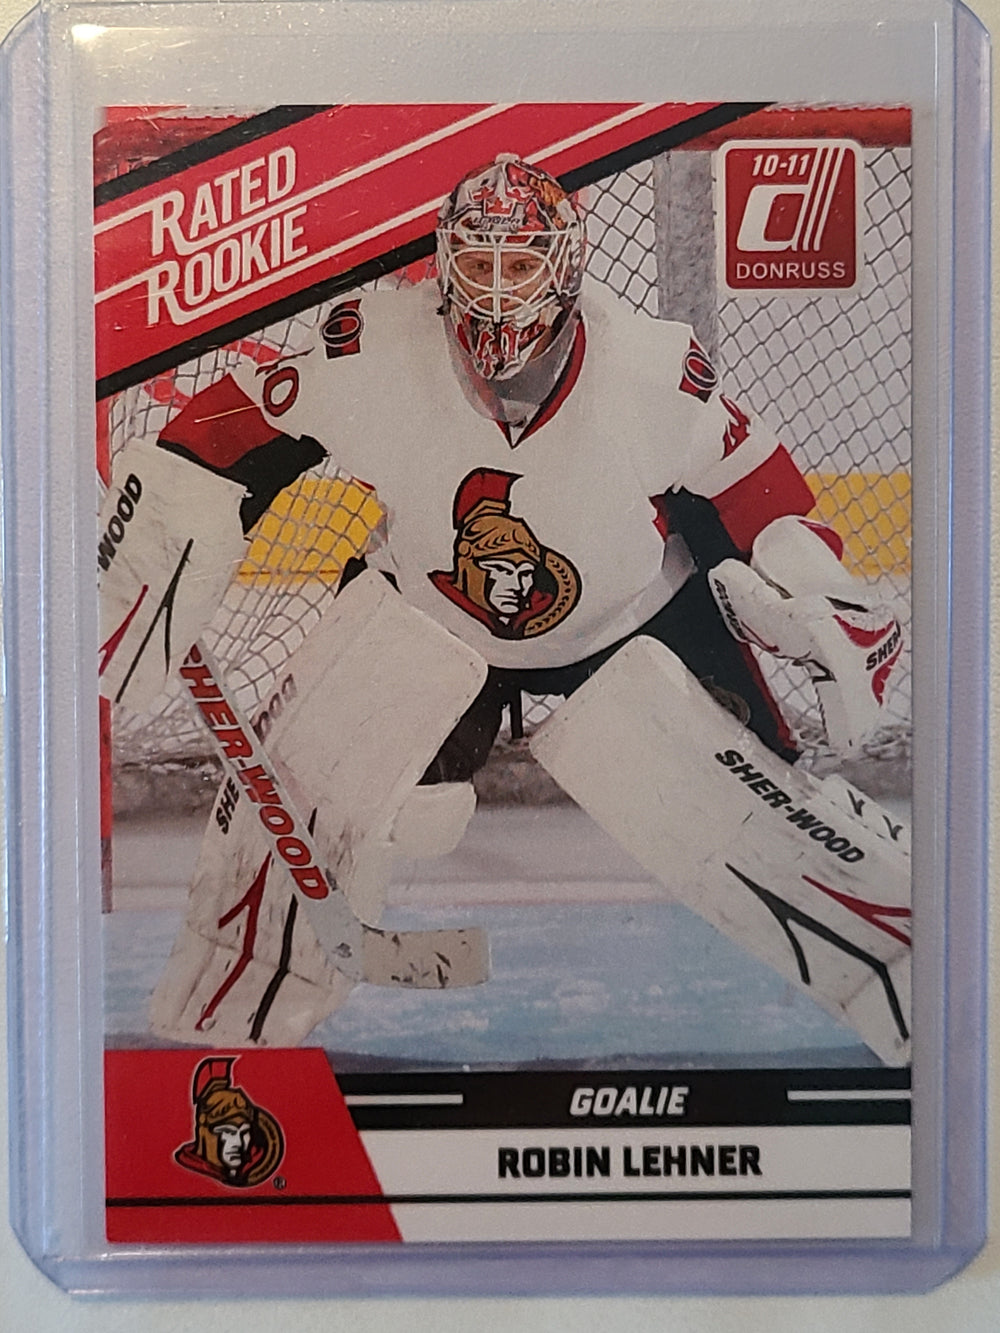 2010-11 Donruss Rated Rookie #9 Robin Lehner Ottawa Senators RC